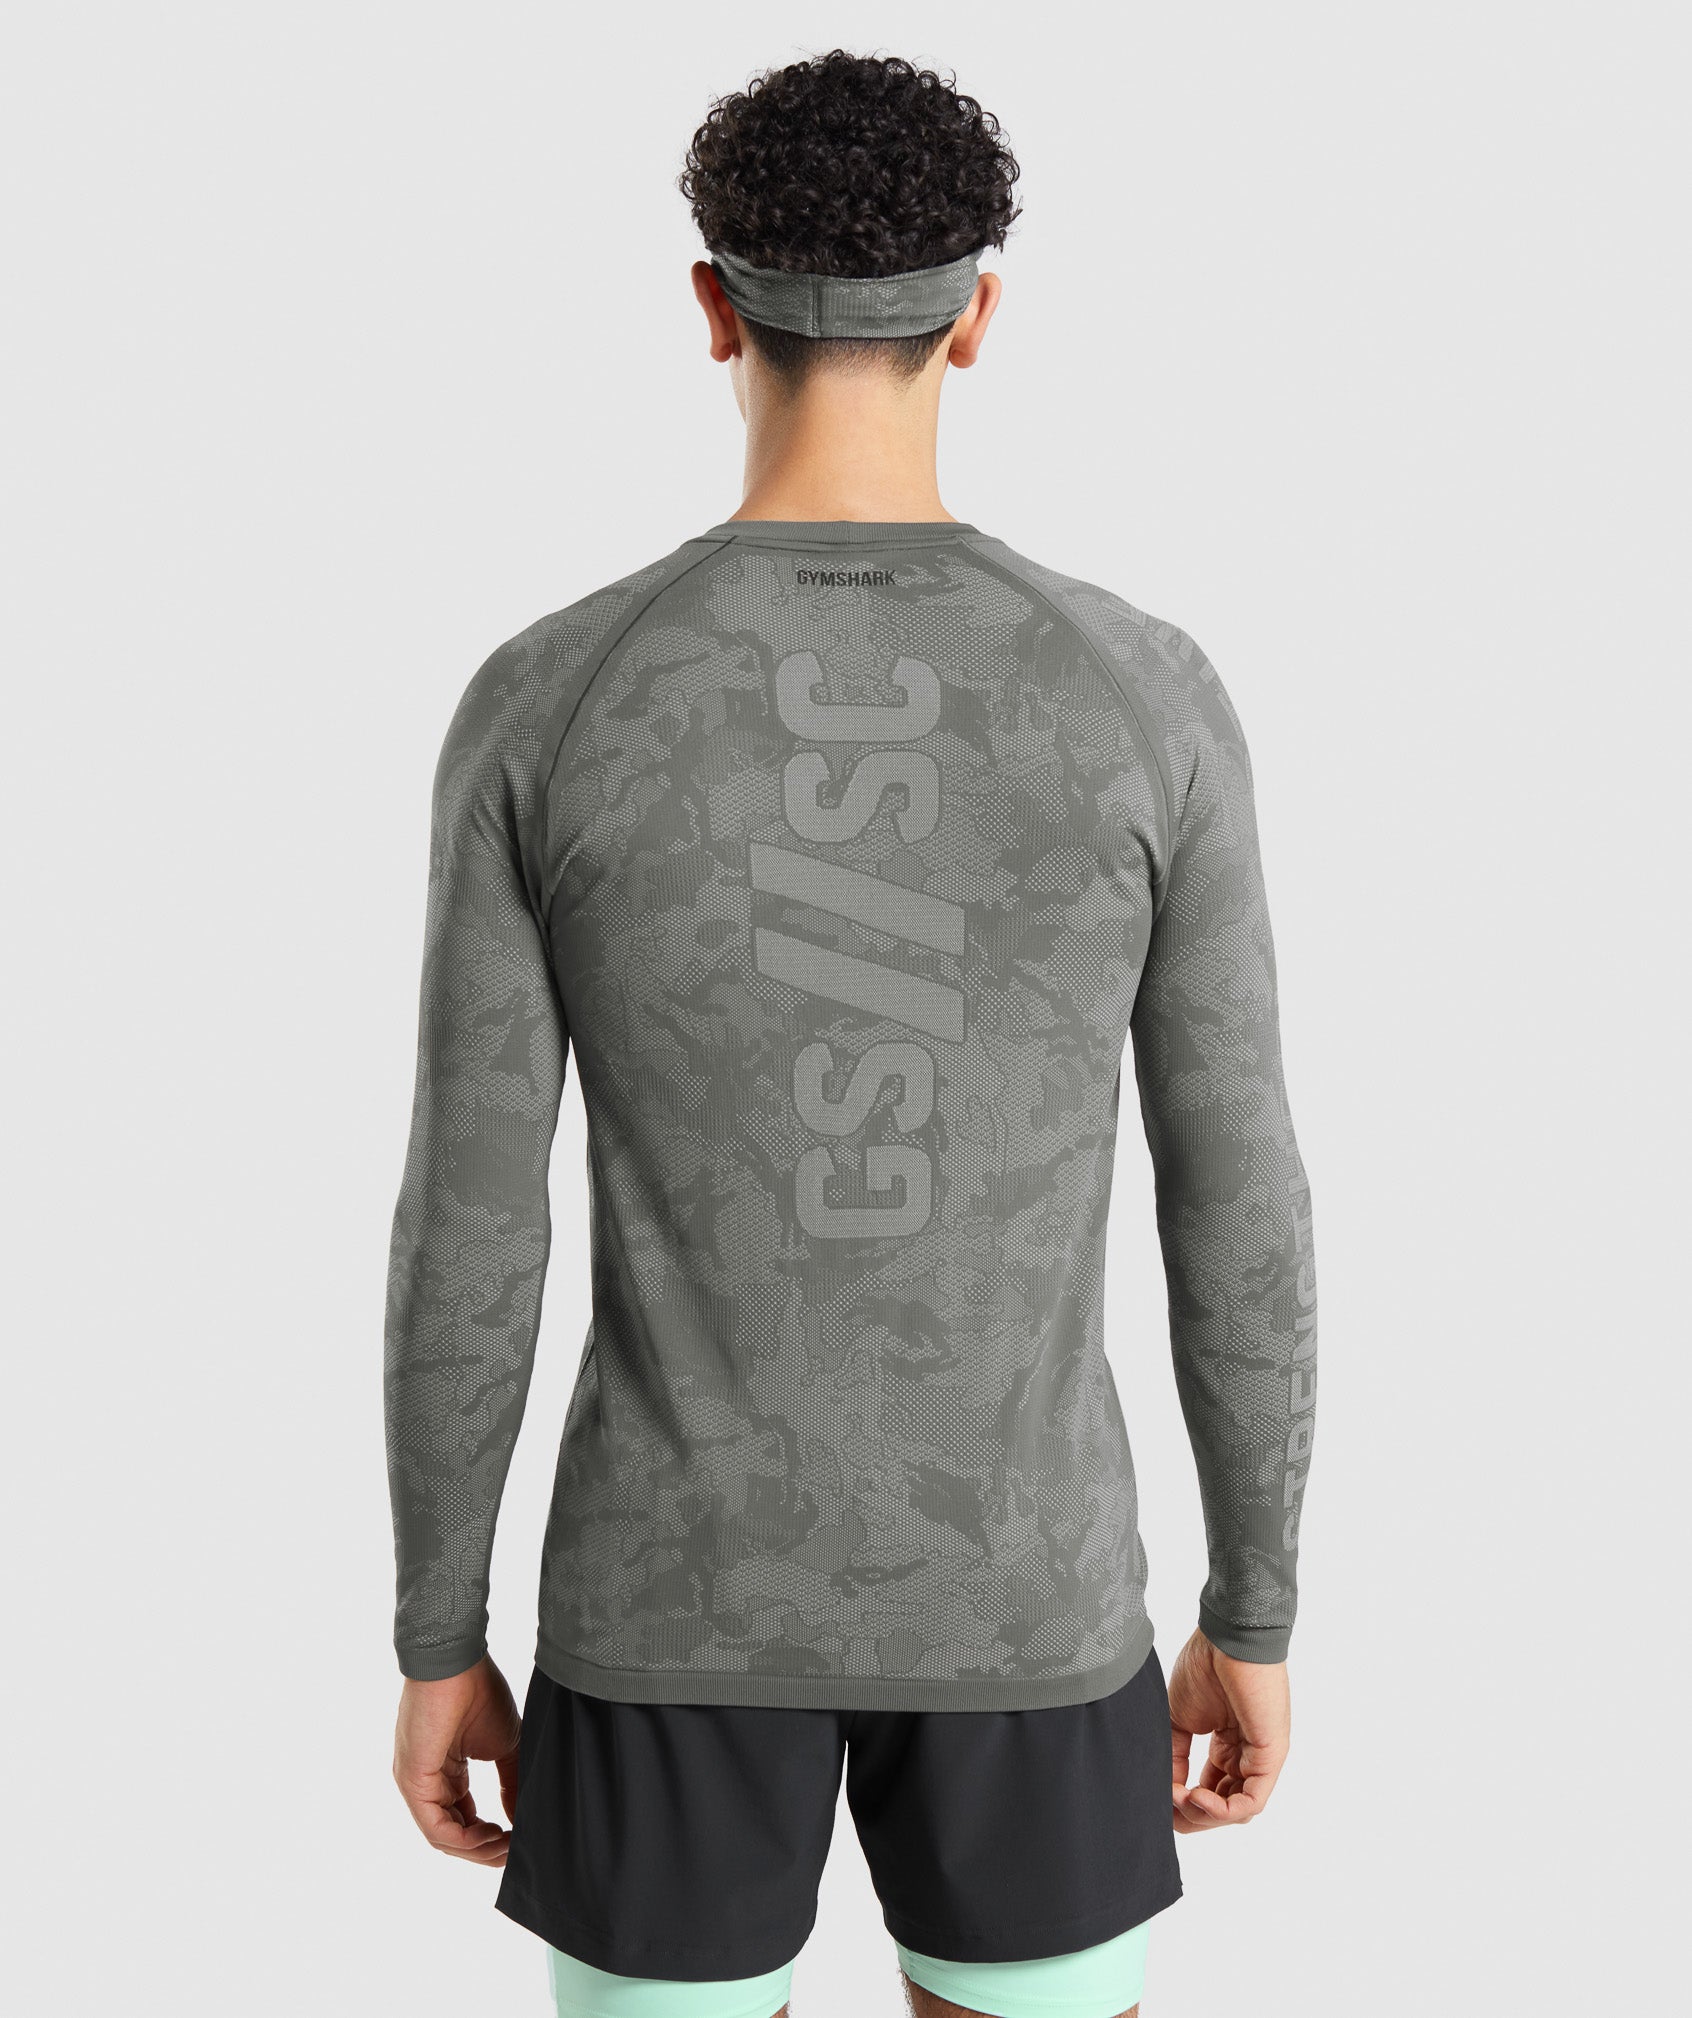 Gymshark//Steve Cook Long Sleeve Seamless T-Shirt in Charcoal Grey/Smokey Grey - view 2